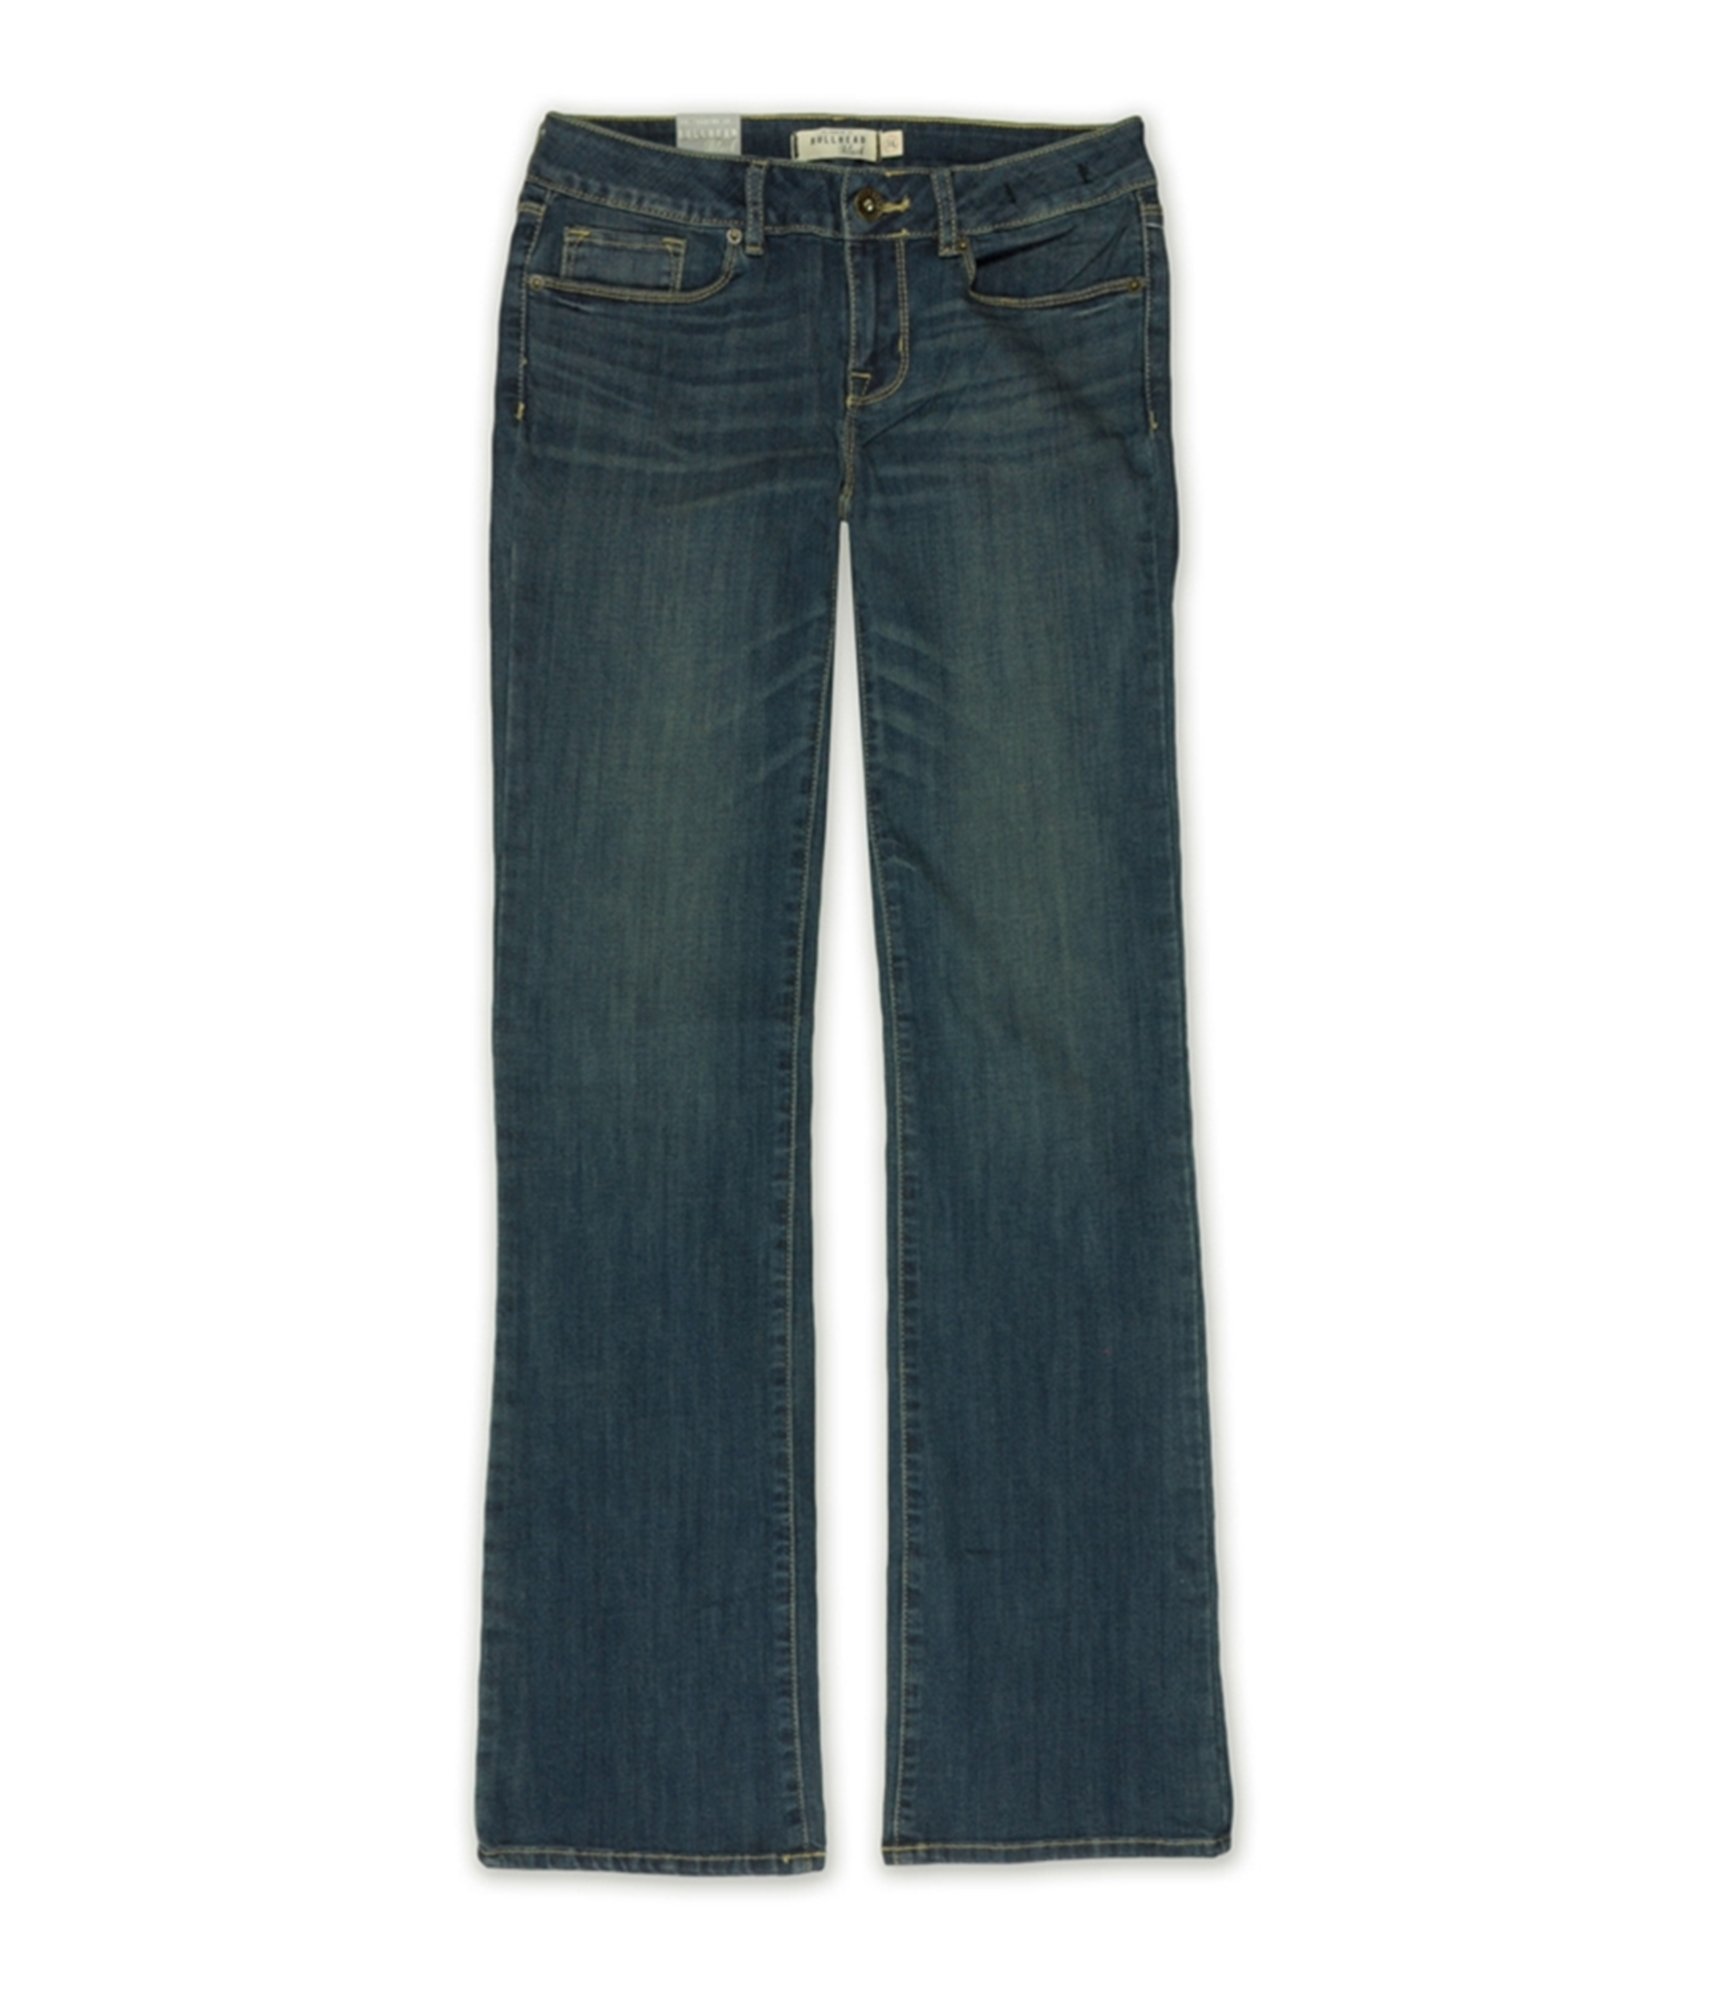 Bullhead Denim Co Mens Slim Skinny Jeans Blue Light Wash 31 x 32 New  eBay